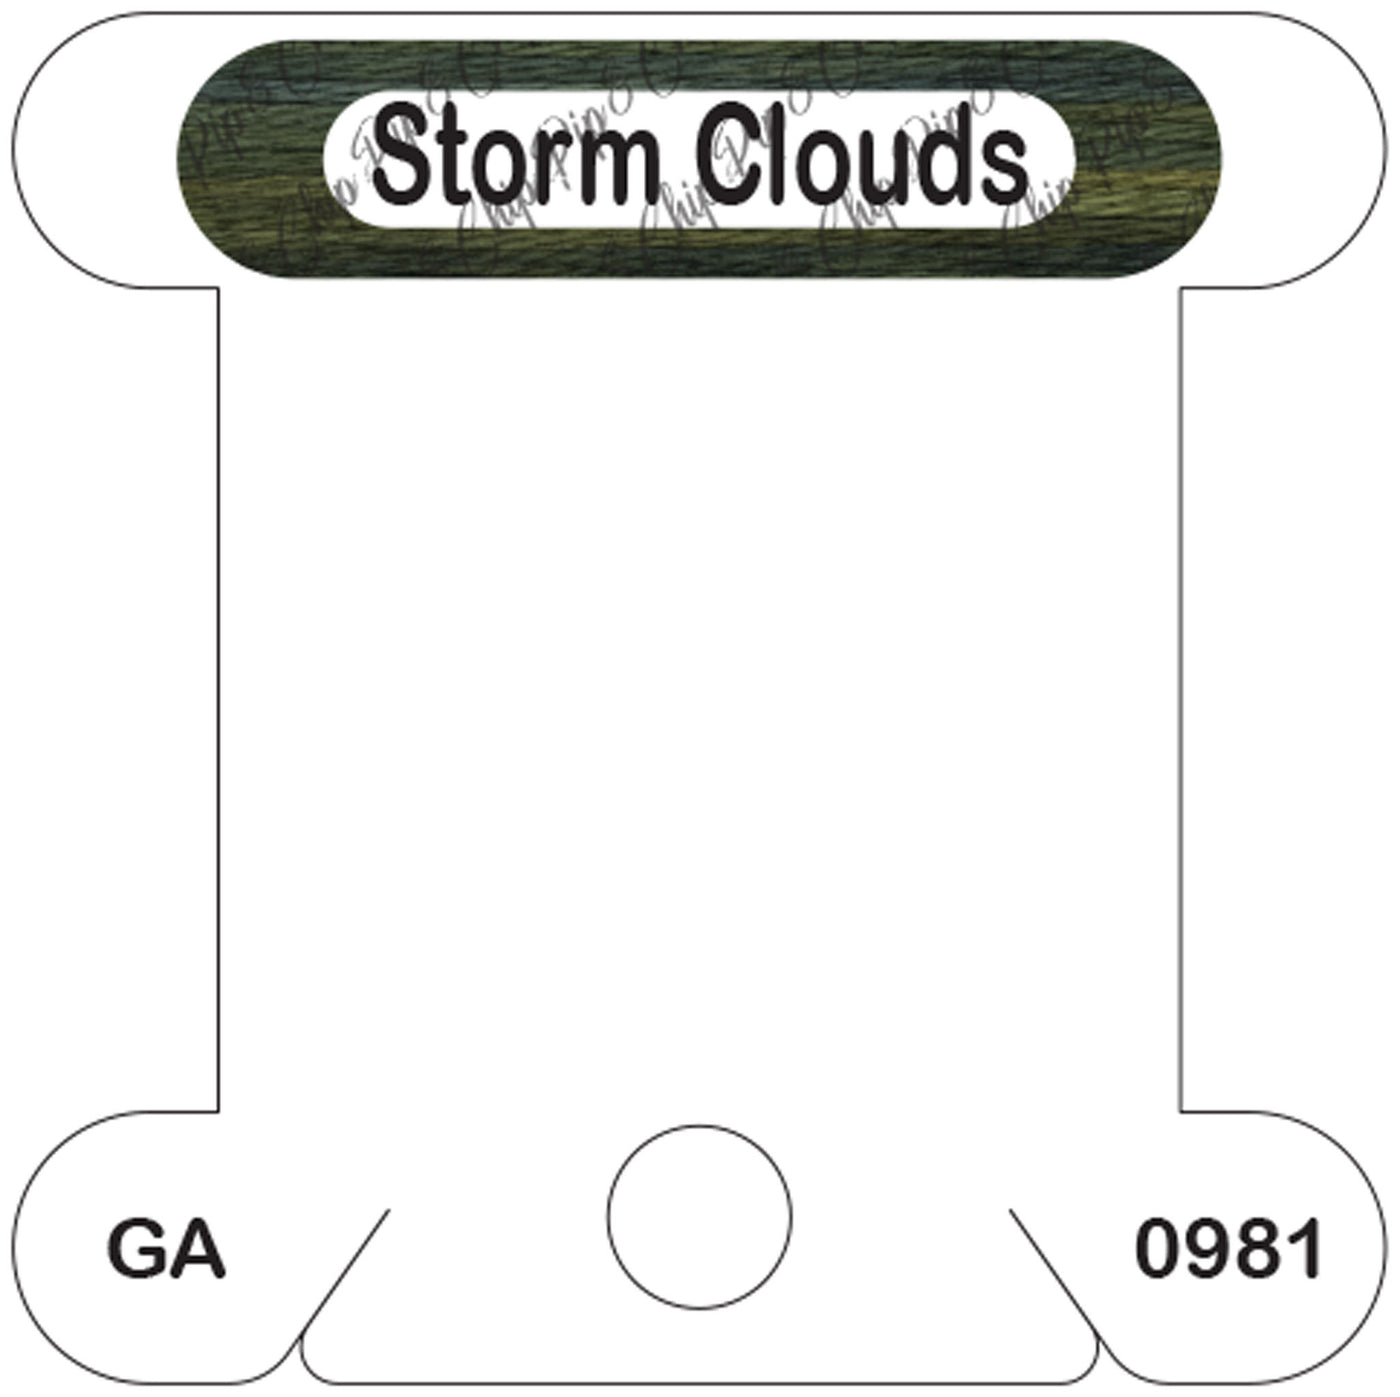 Gentle Arts Storm Clouds acrylic bobbin